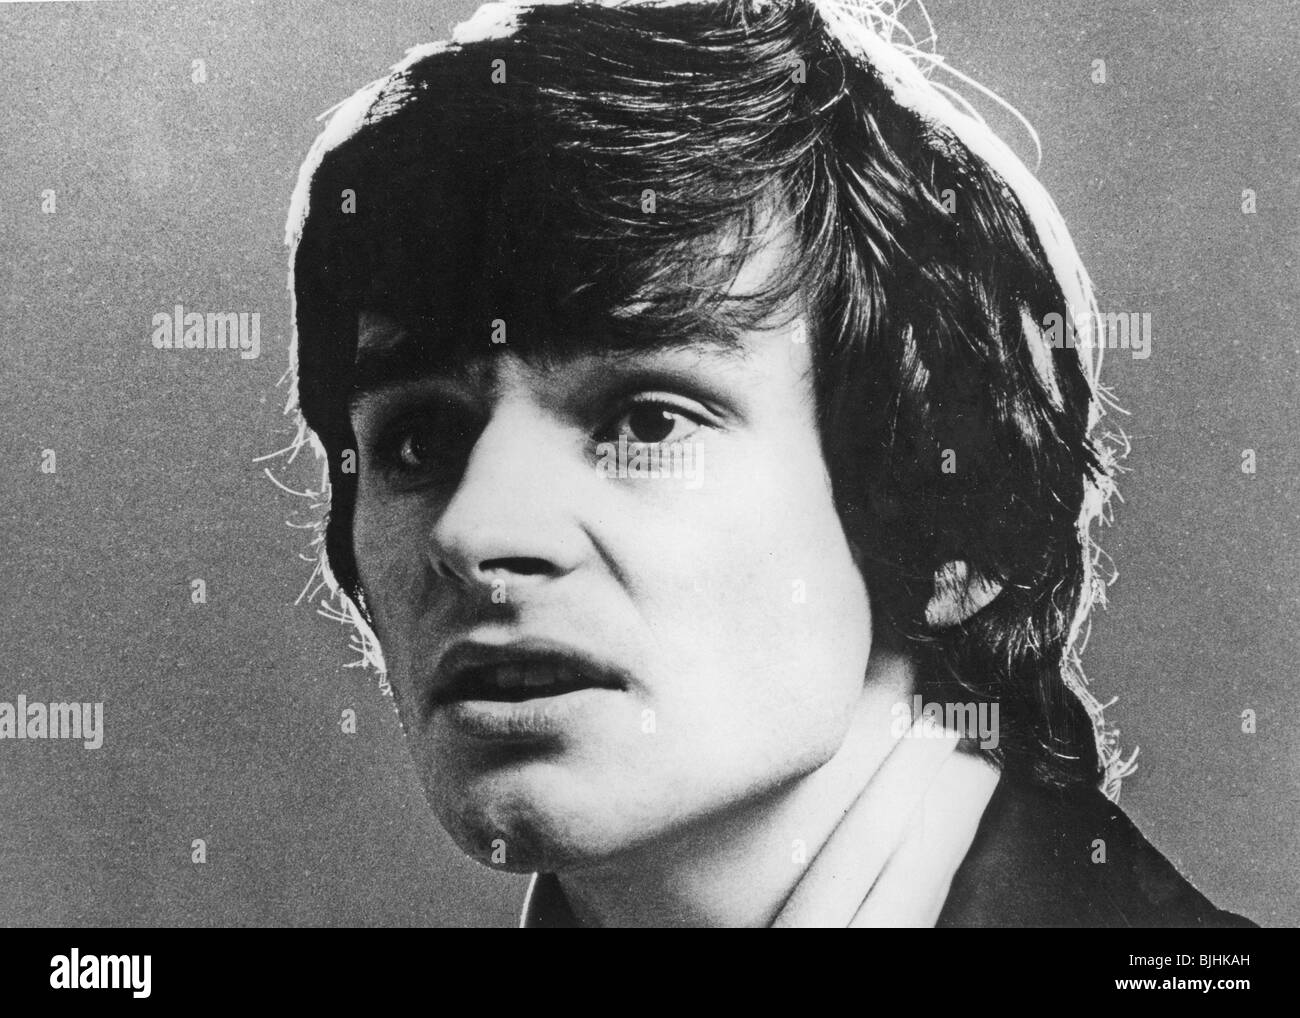 COLIN BLUNSTONE - UK-Rock-Musiker um 1970 Stockfoto